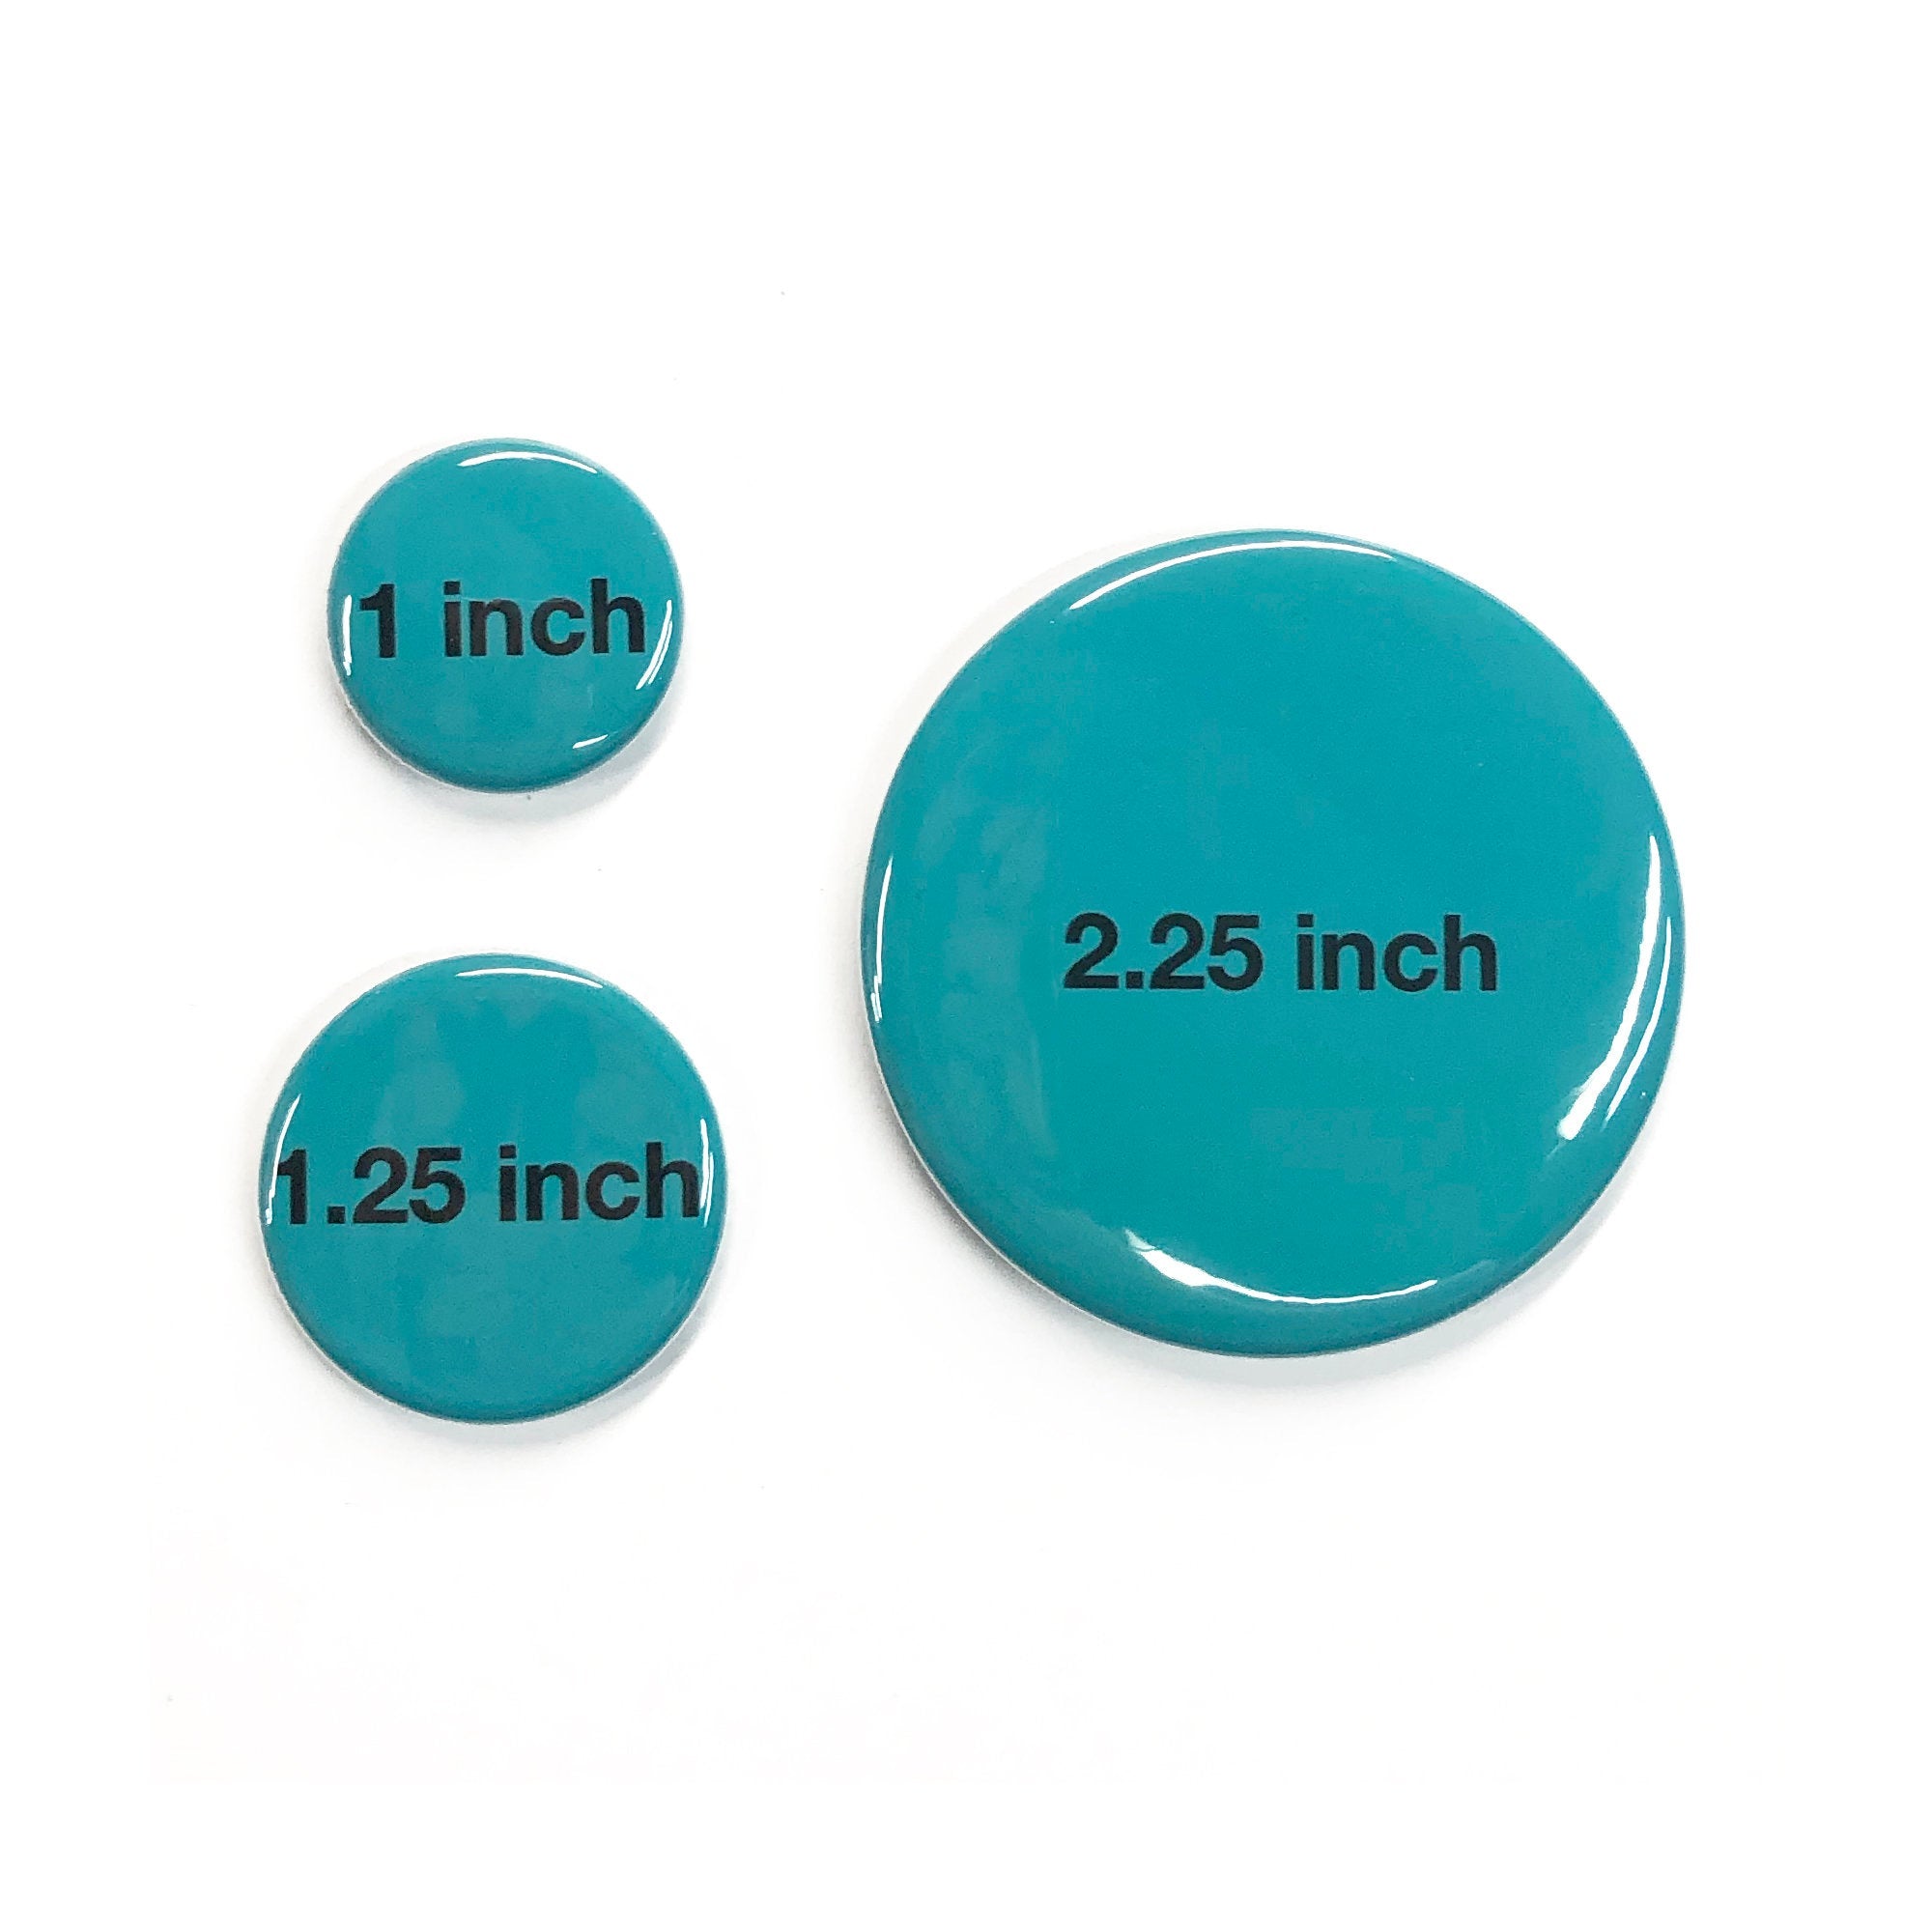 Rainbow Pin, Magnet, or Pocket Mirror